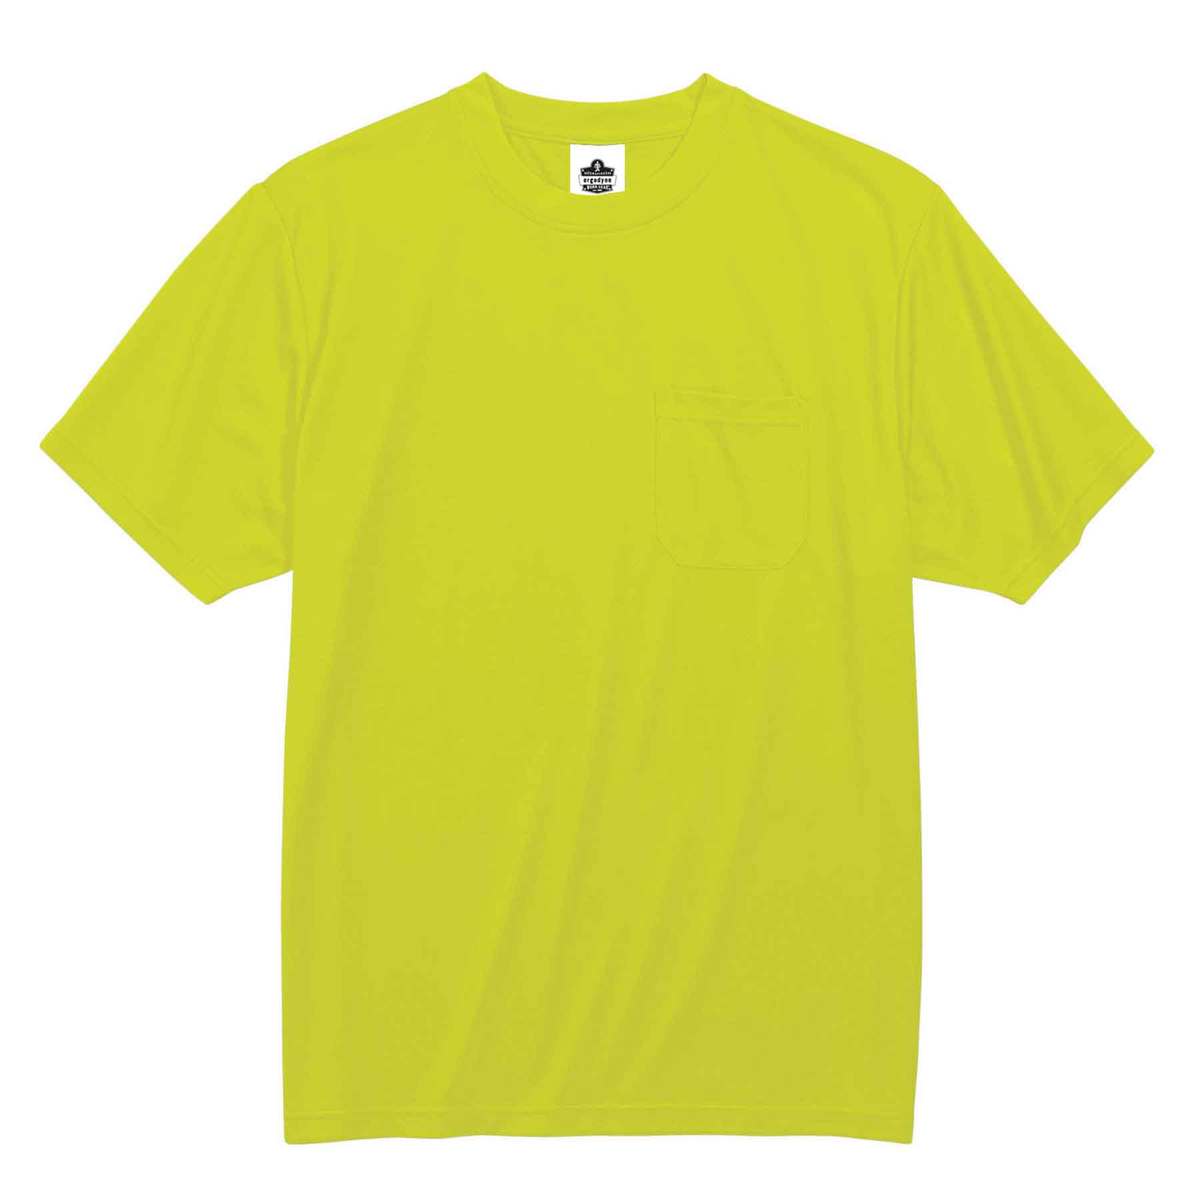 Ergodyne Medium Lime GloWear® 8089 4.1 Ounce Polyester T-Shirt